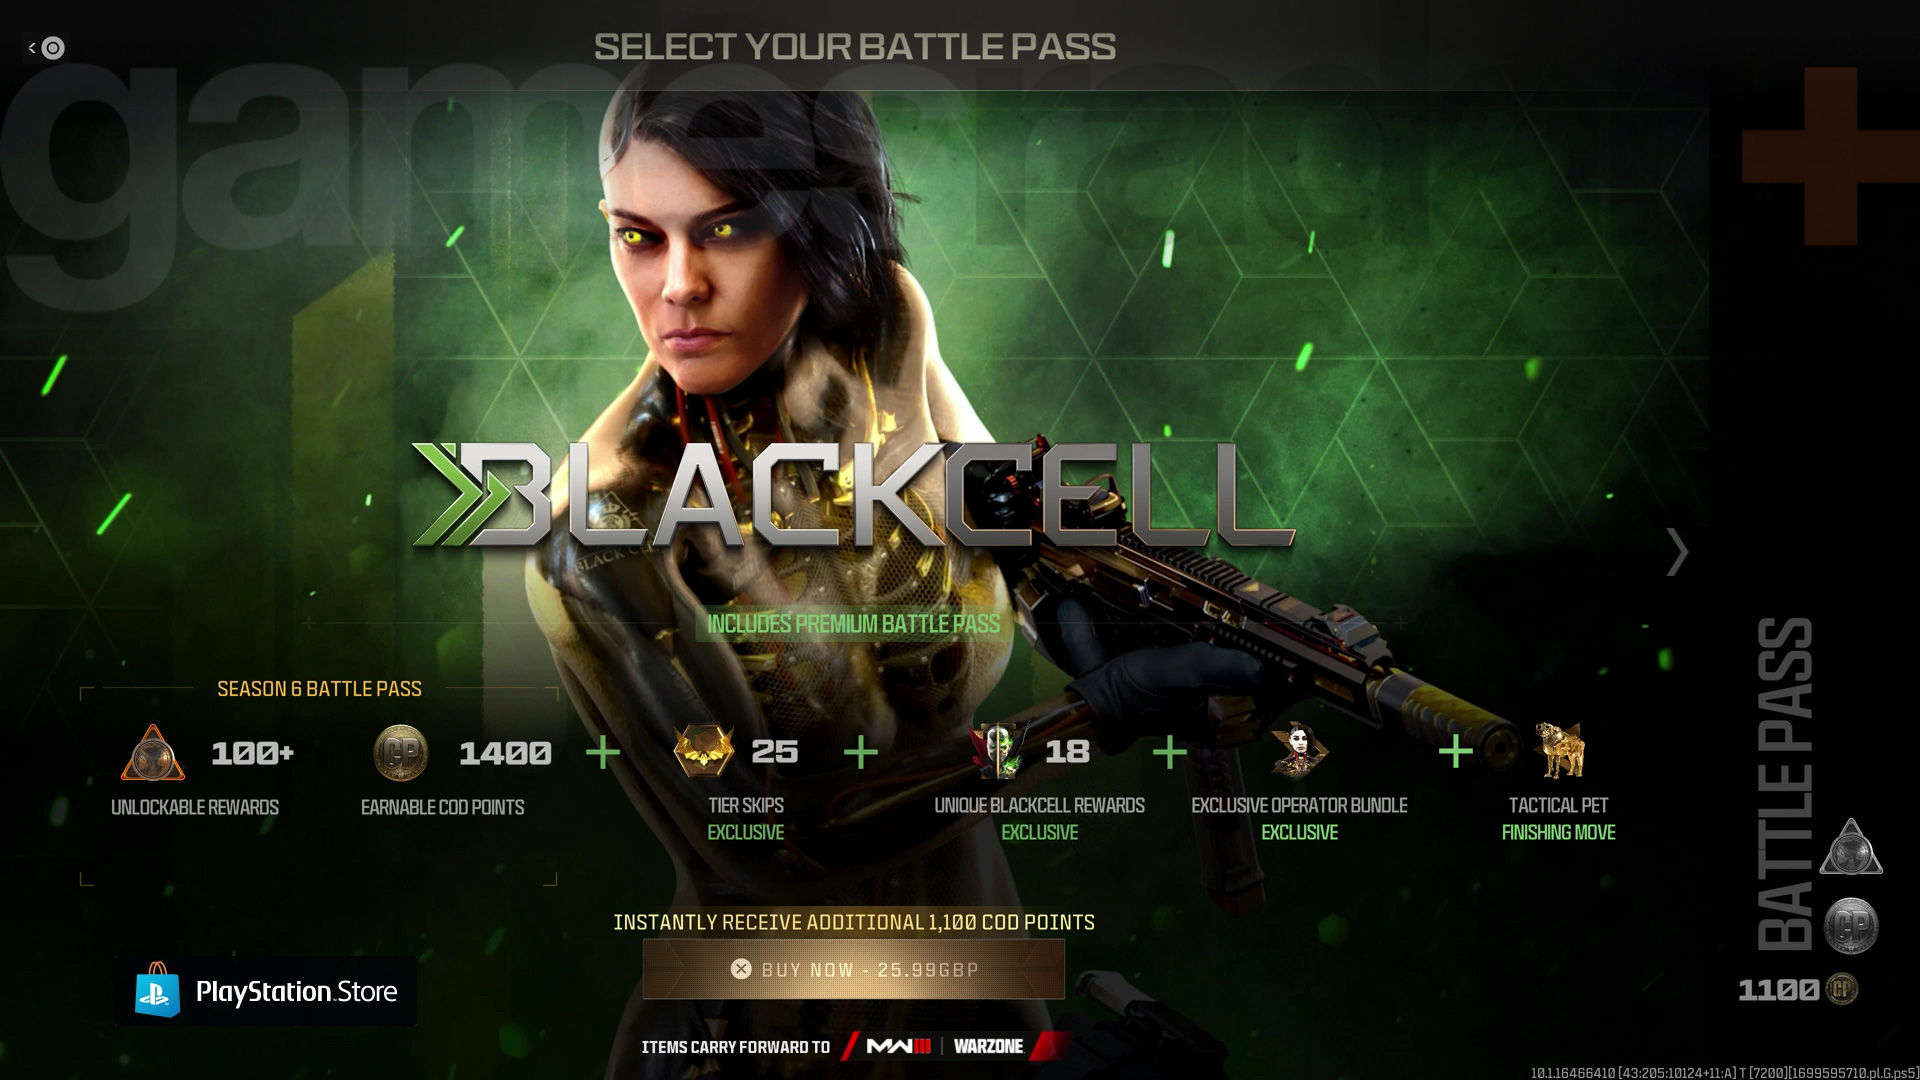 A BlackCell Modern Warfare 3 Battle Pass 1. szezonja